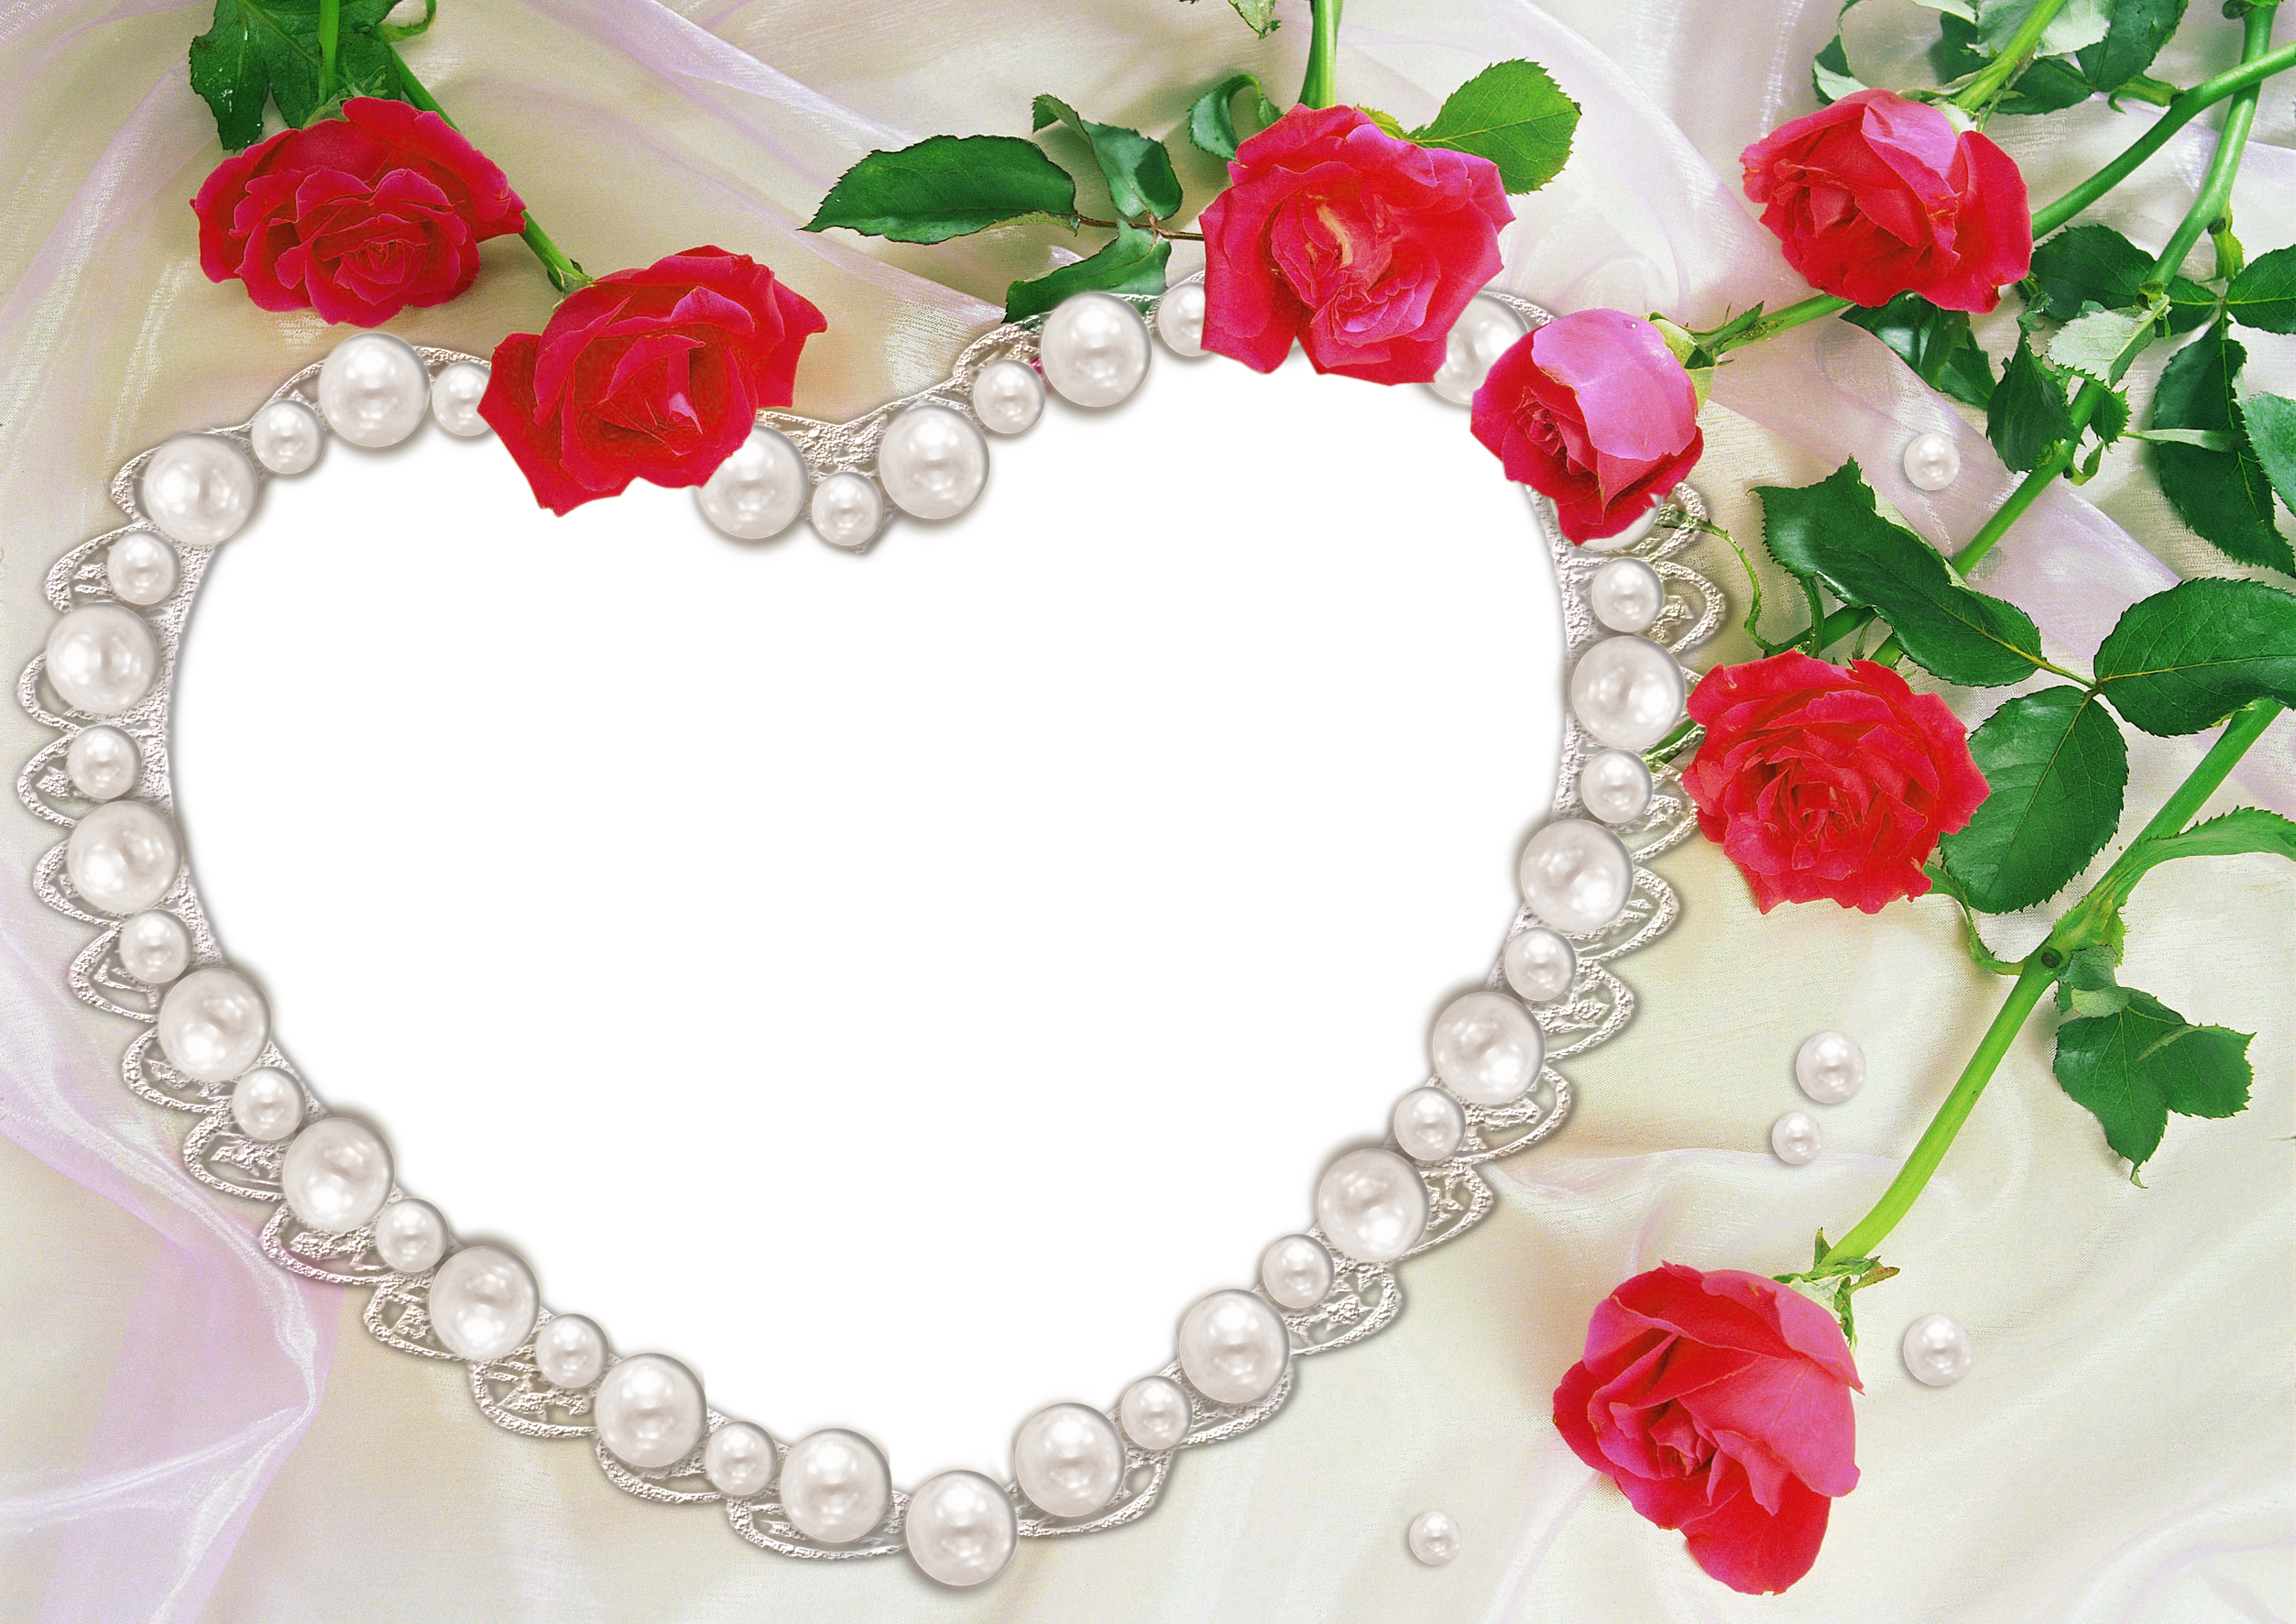 pearls clipart heart shape